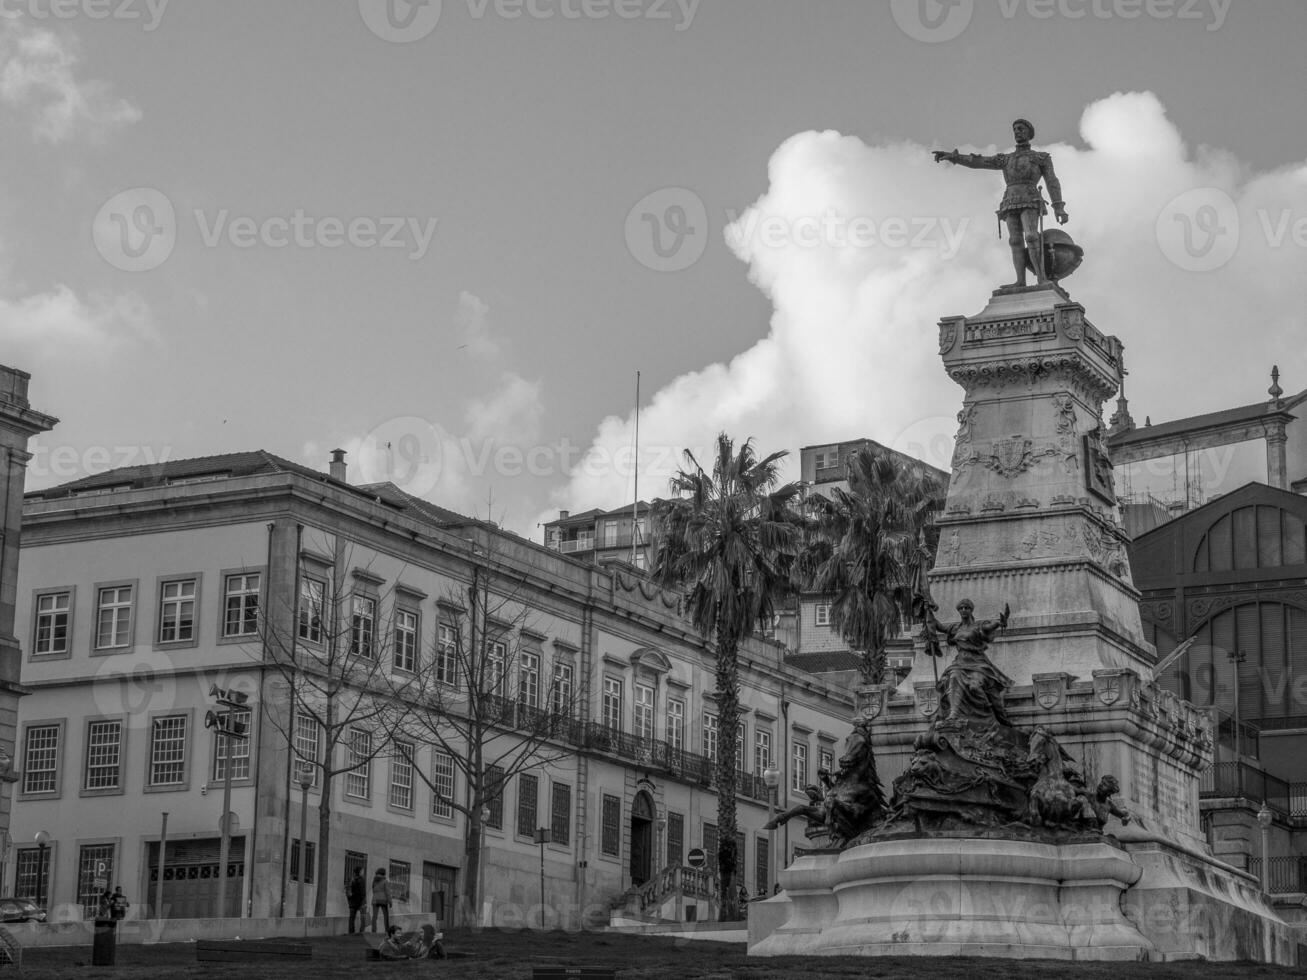 lissabon stad in portugal foto